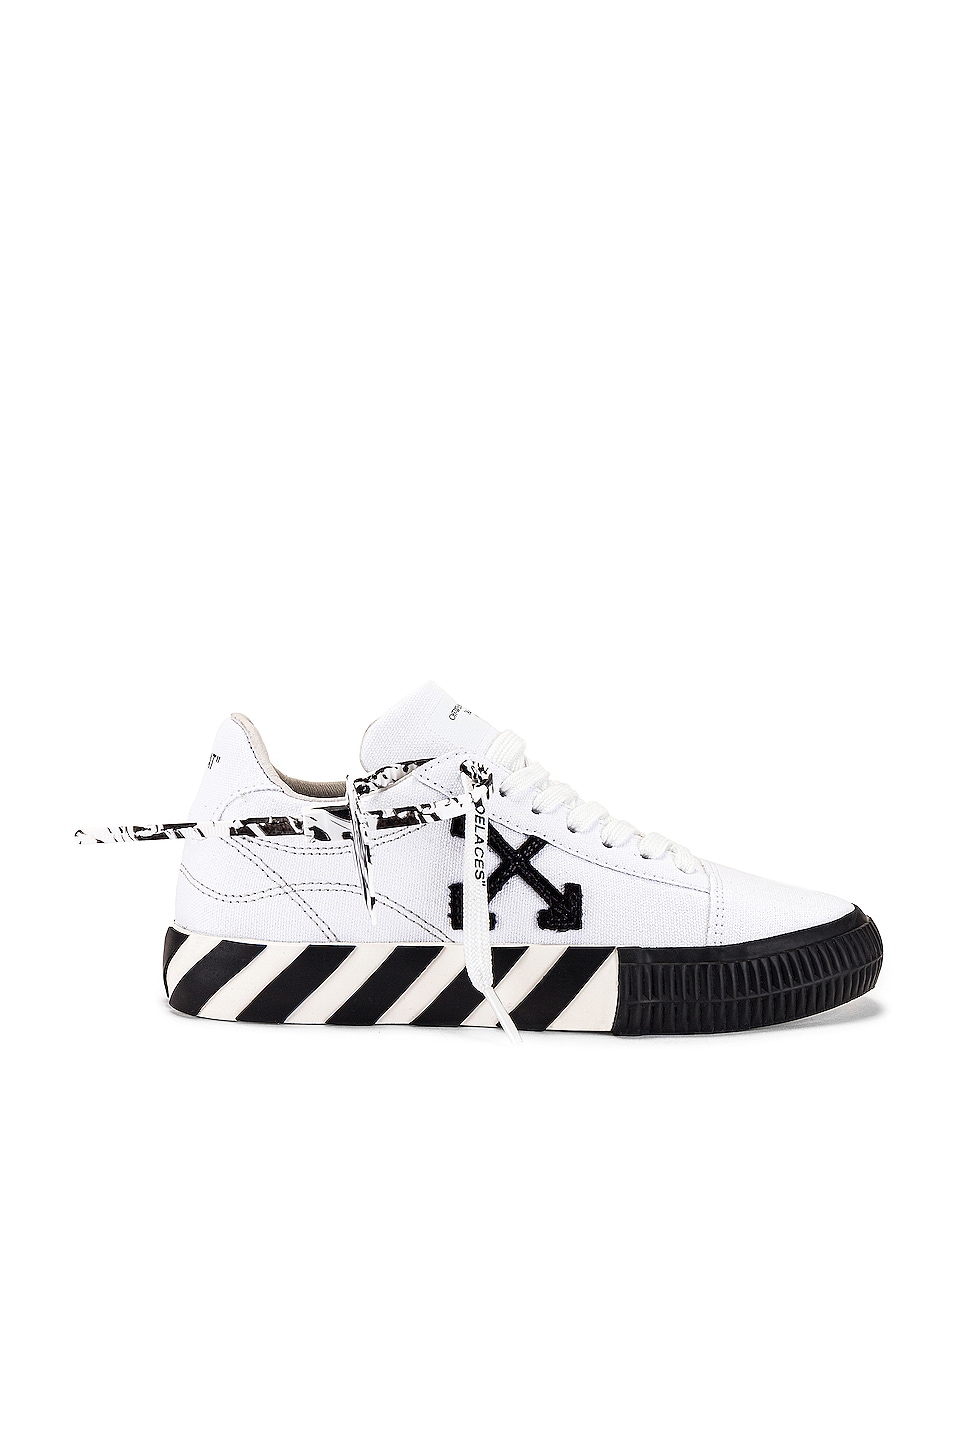 OFF-WHITE Low Vulcanized Canvas Sneaker in White & Black | REVOLVE